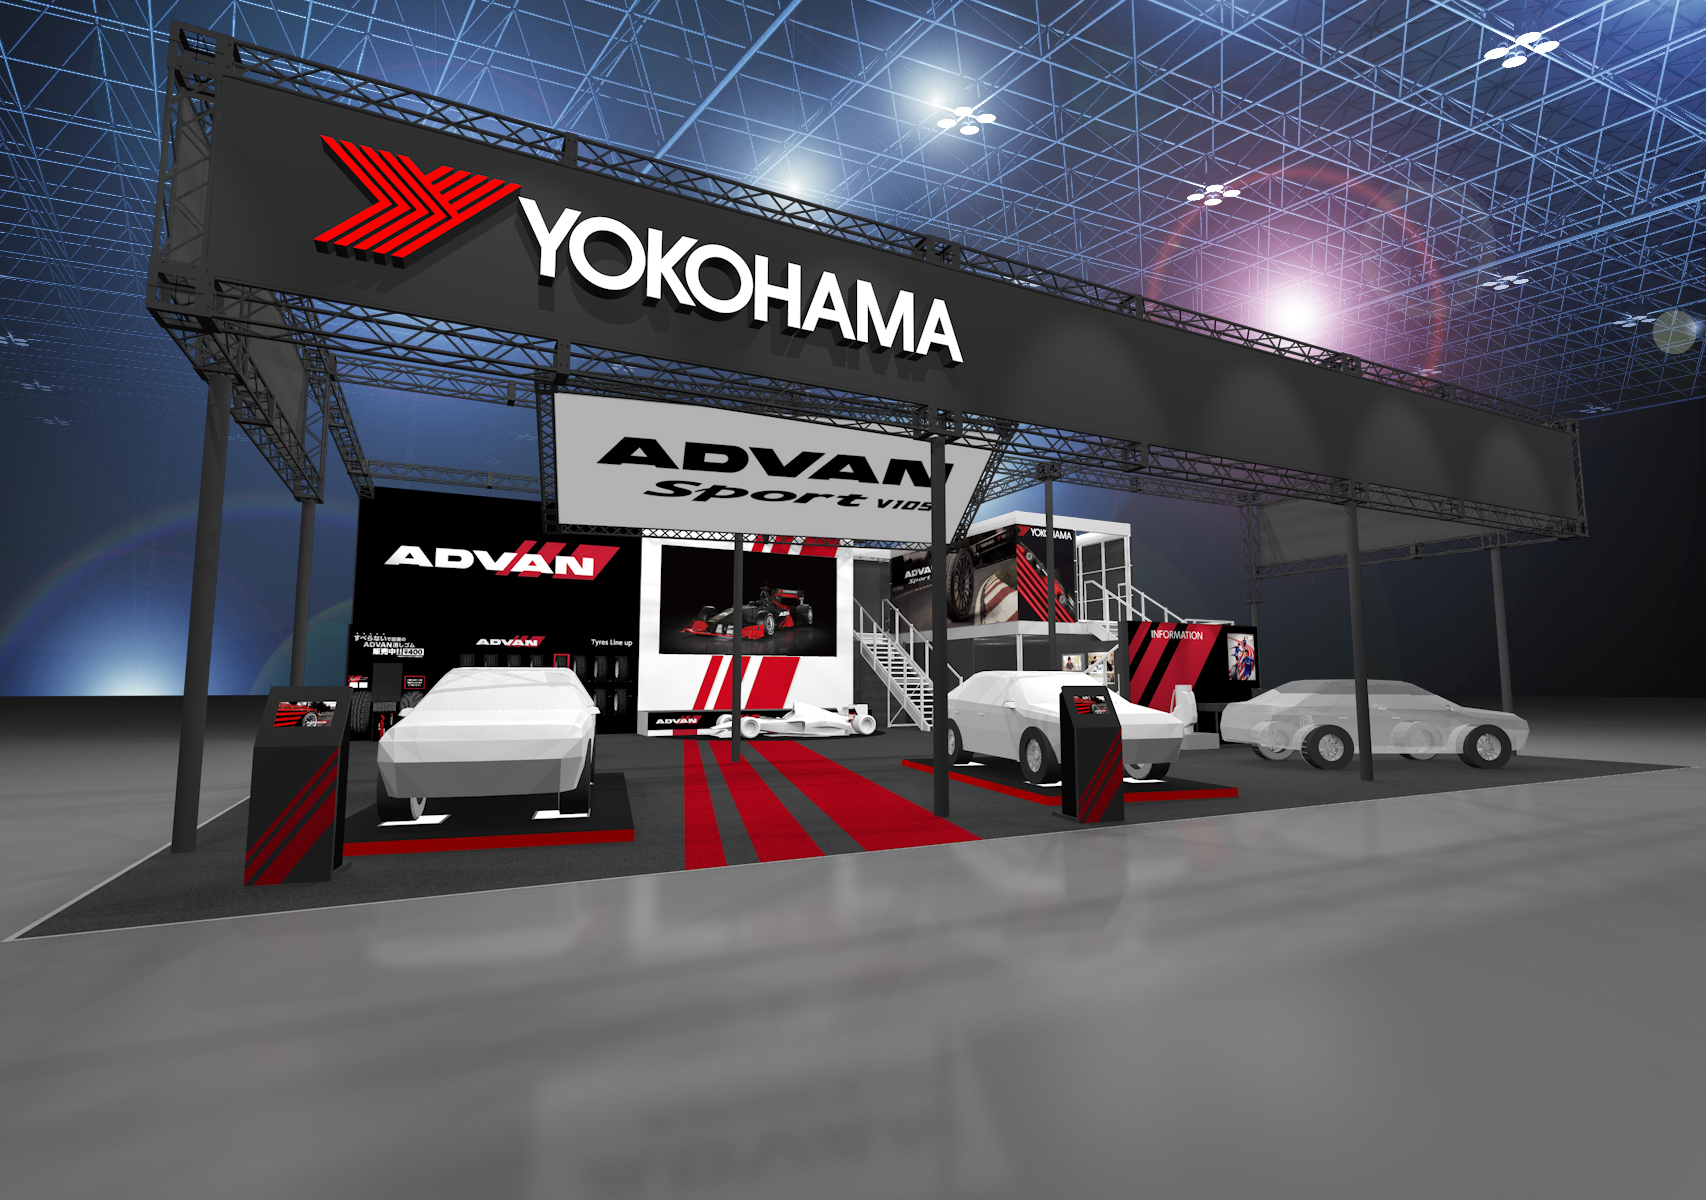 Yokohama exhibiting at Tokyo Auto Salon 2016